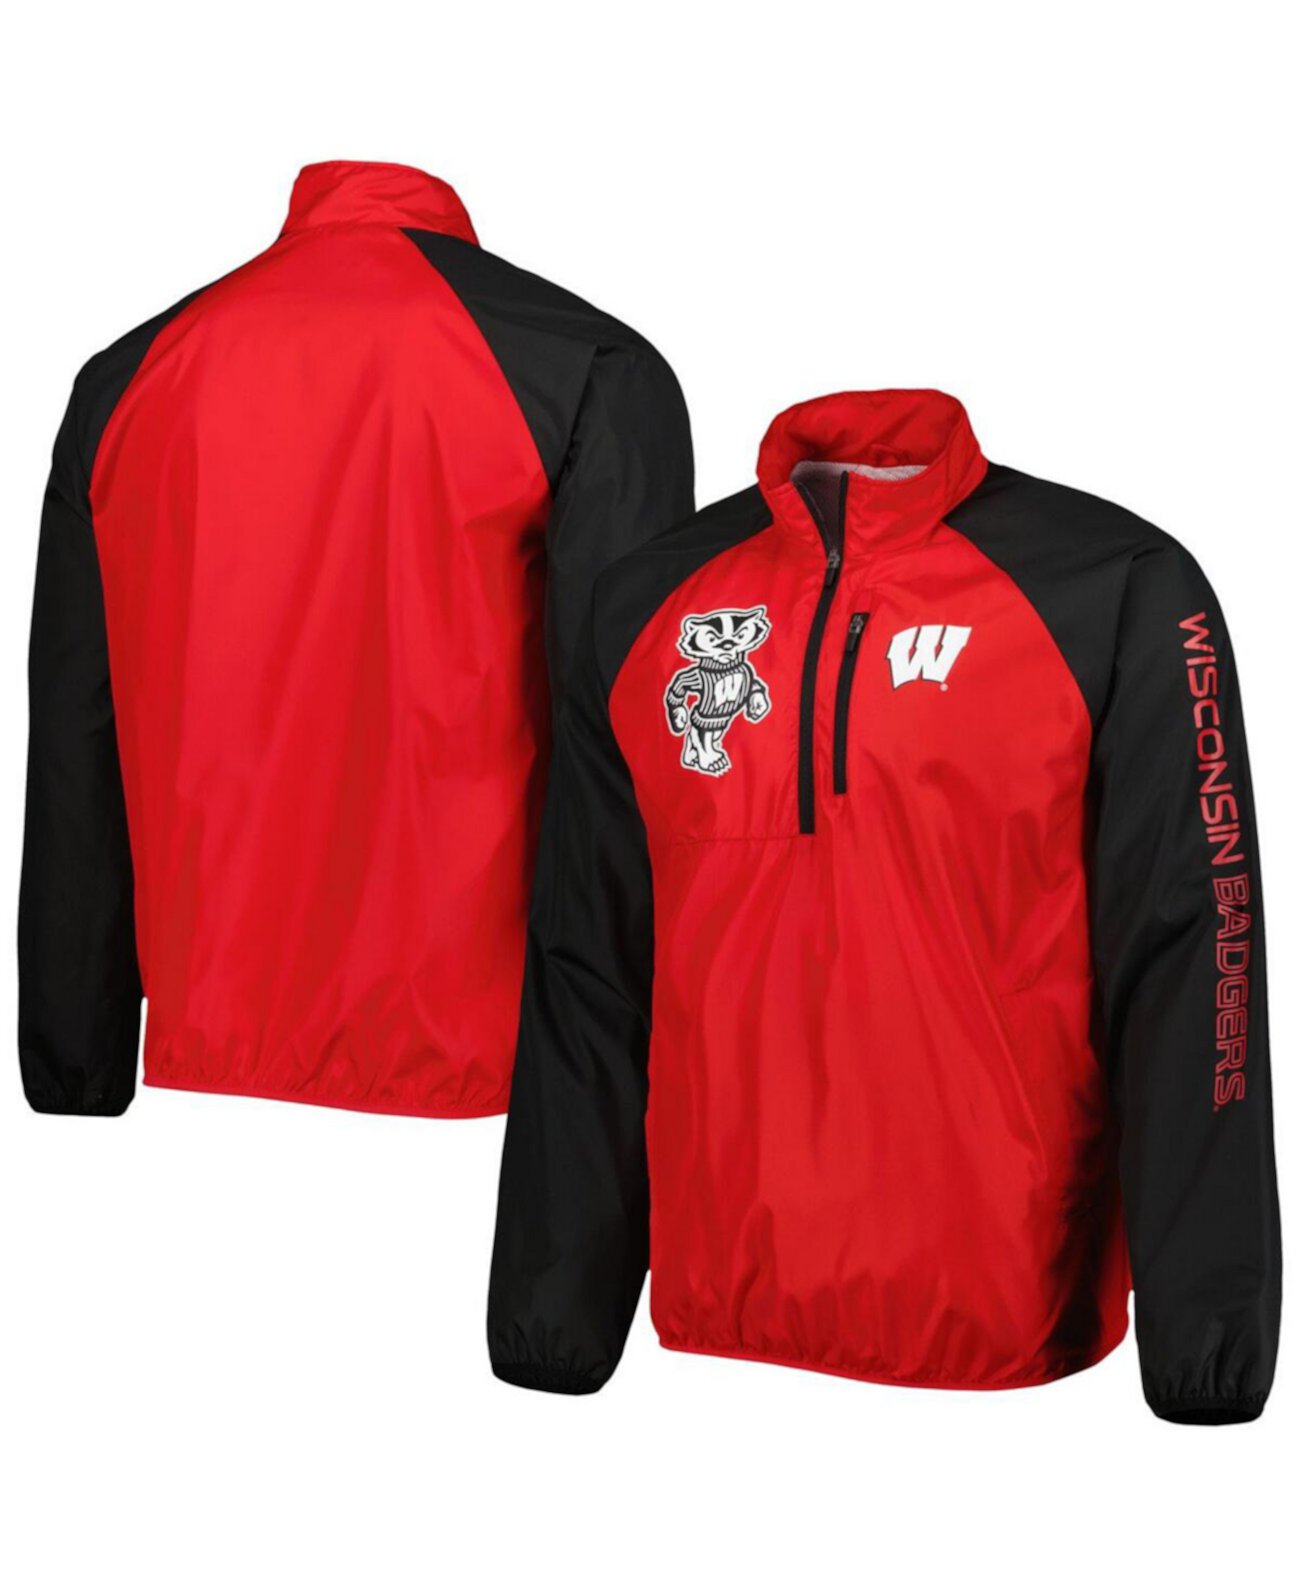 Мужская красно-черная куртка Wisconsin Badgers Point Guard с молнией до середины реглан G-III Sports